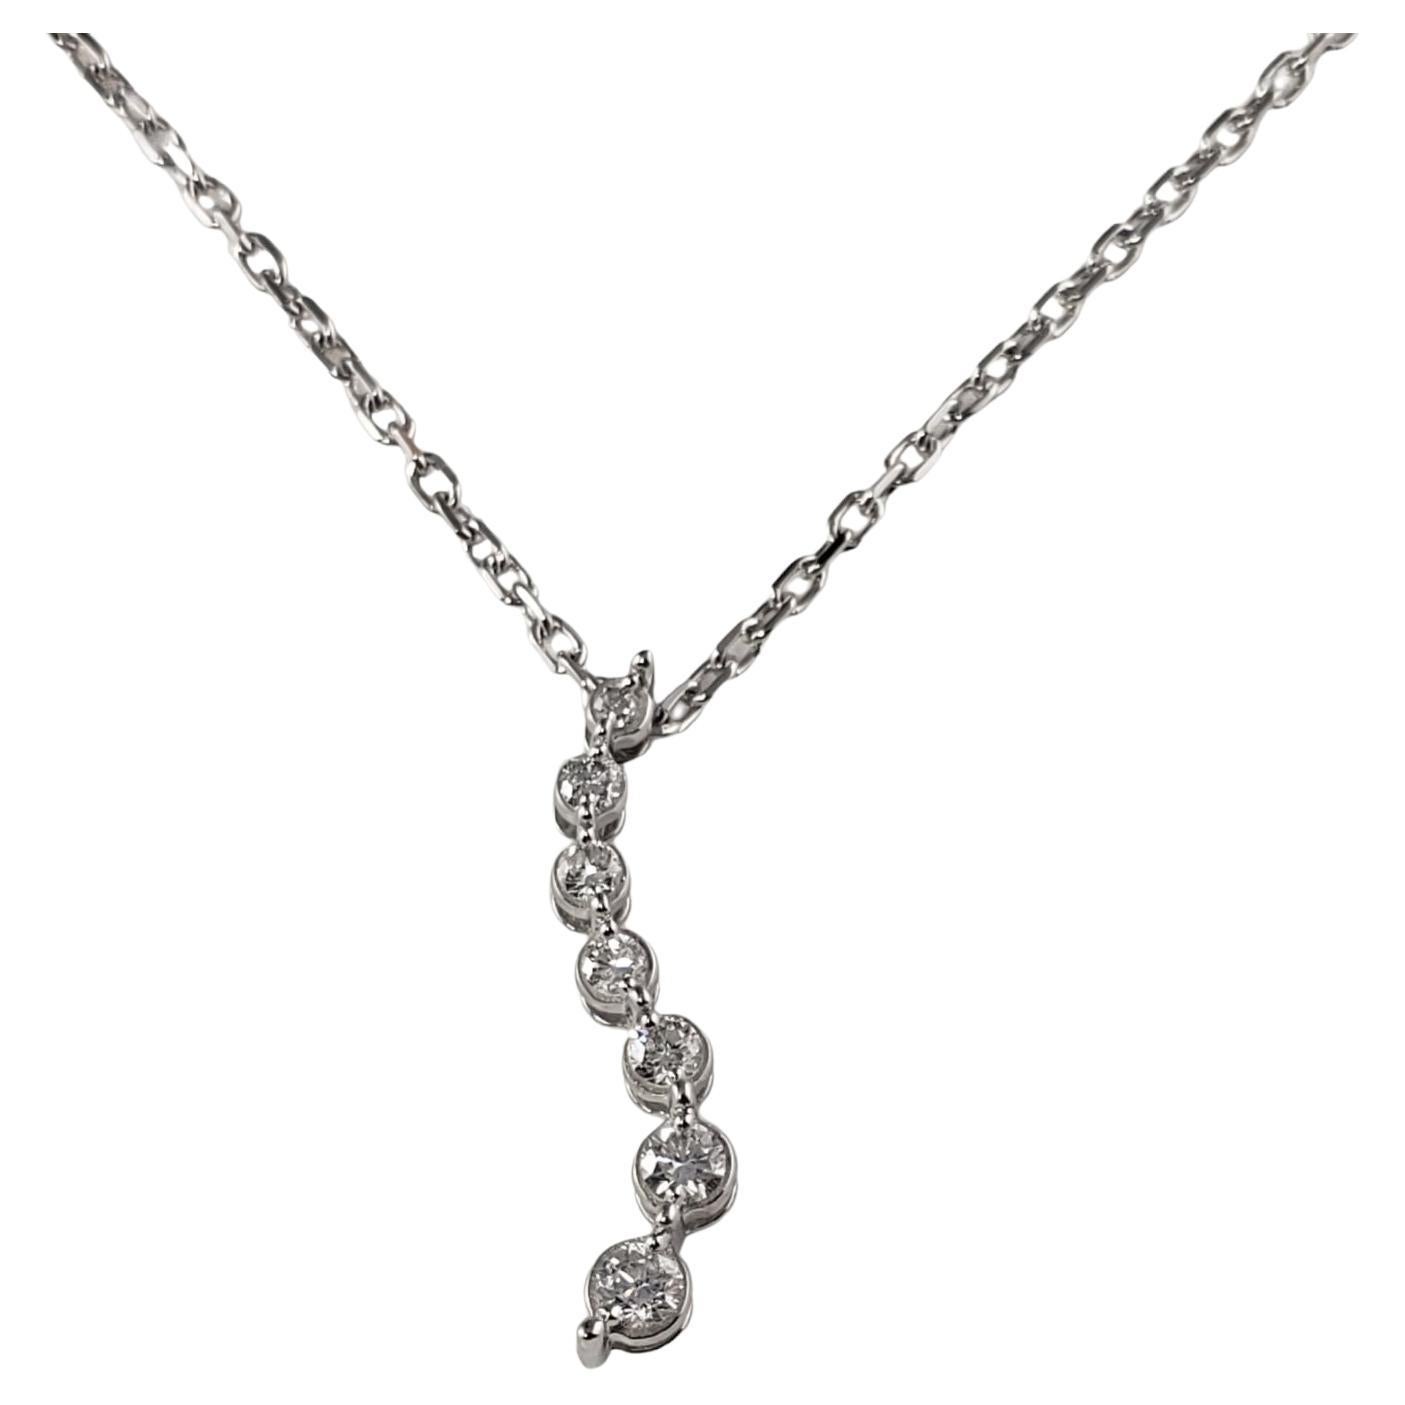 14 Karat White Gold and Graduated Diamond Pendant Necklace